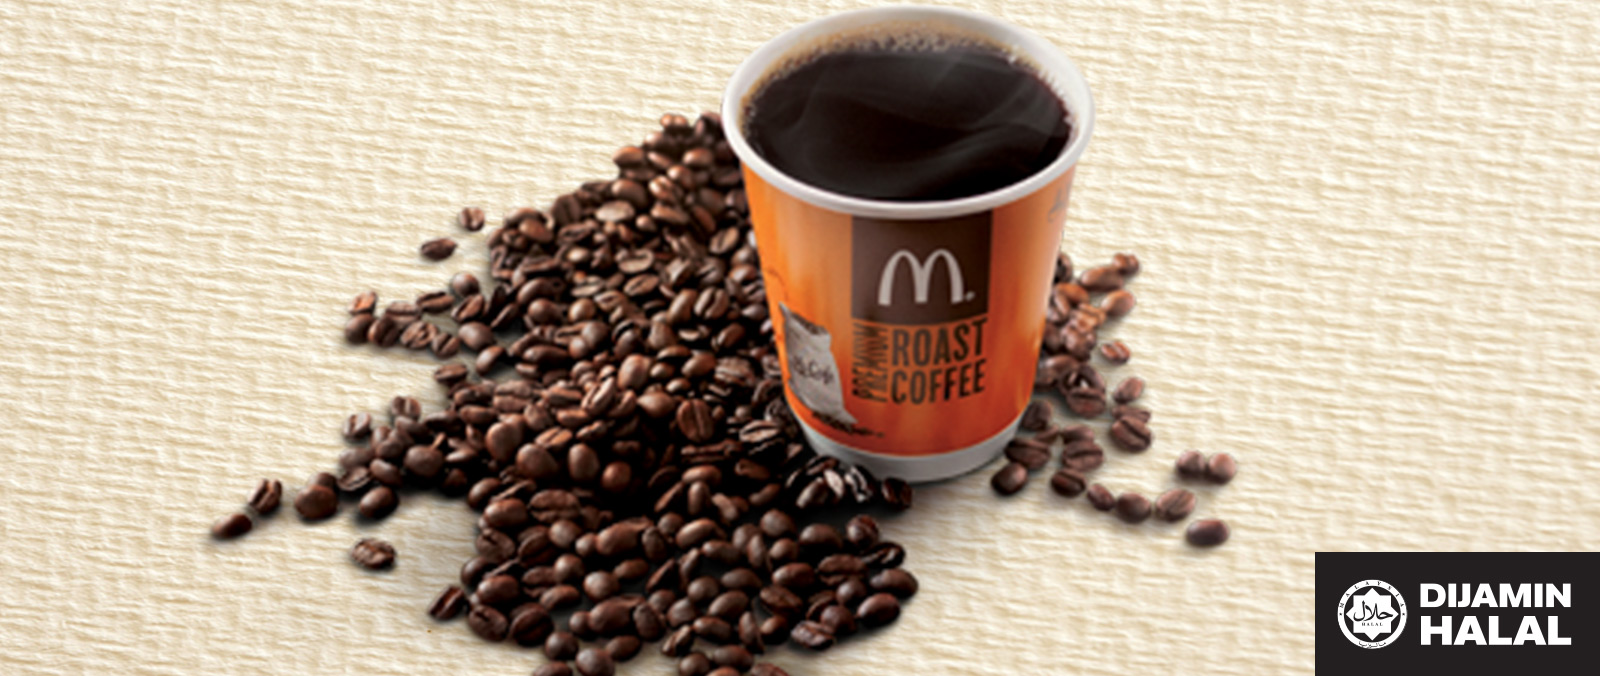 Statement on McDonald's® Coffee's image'